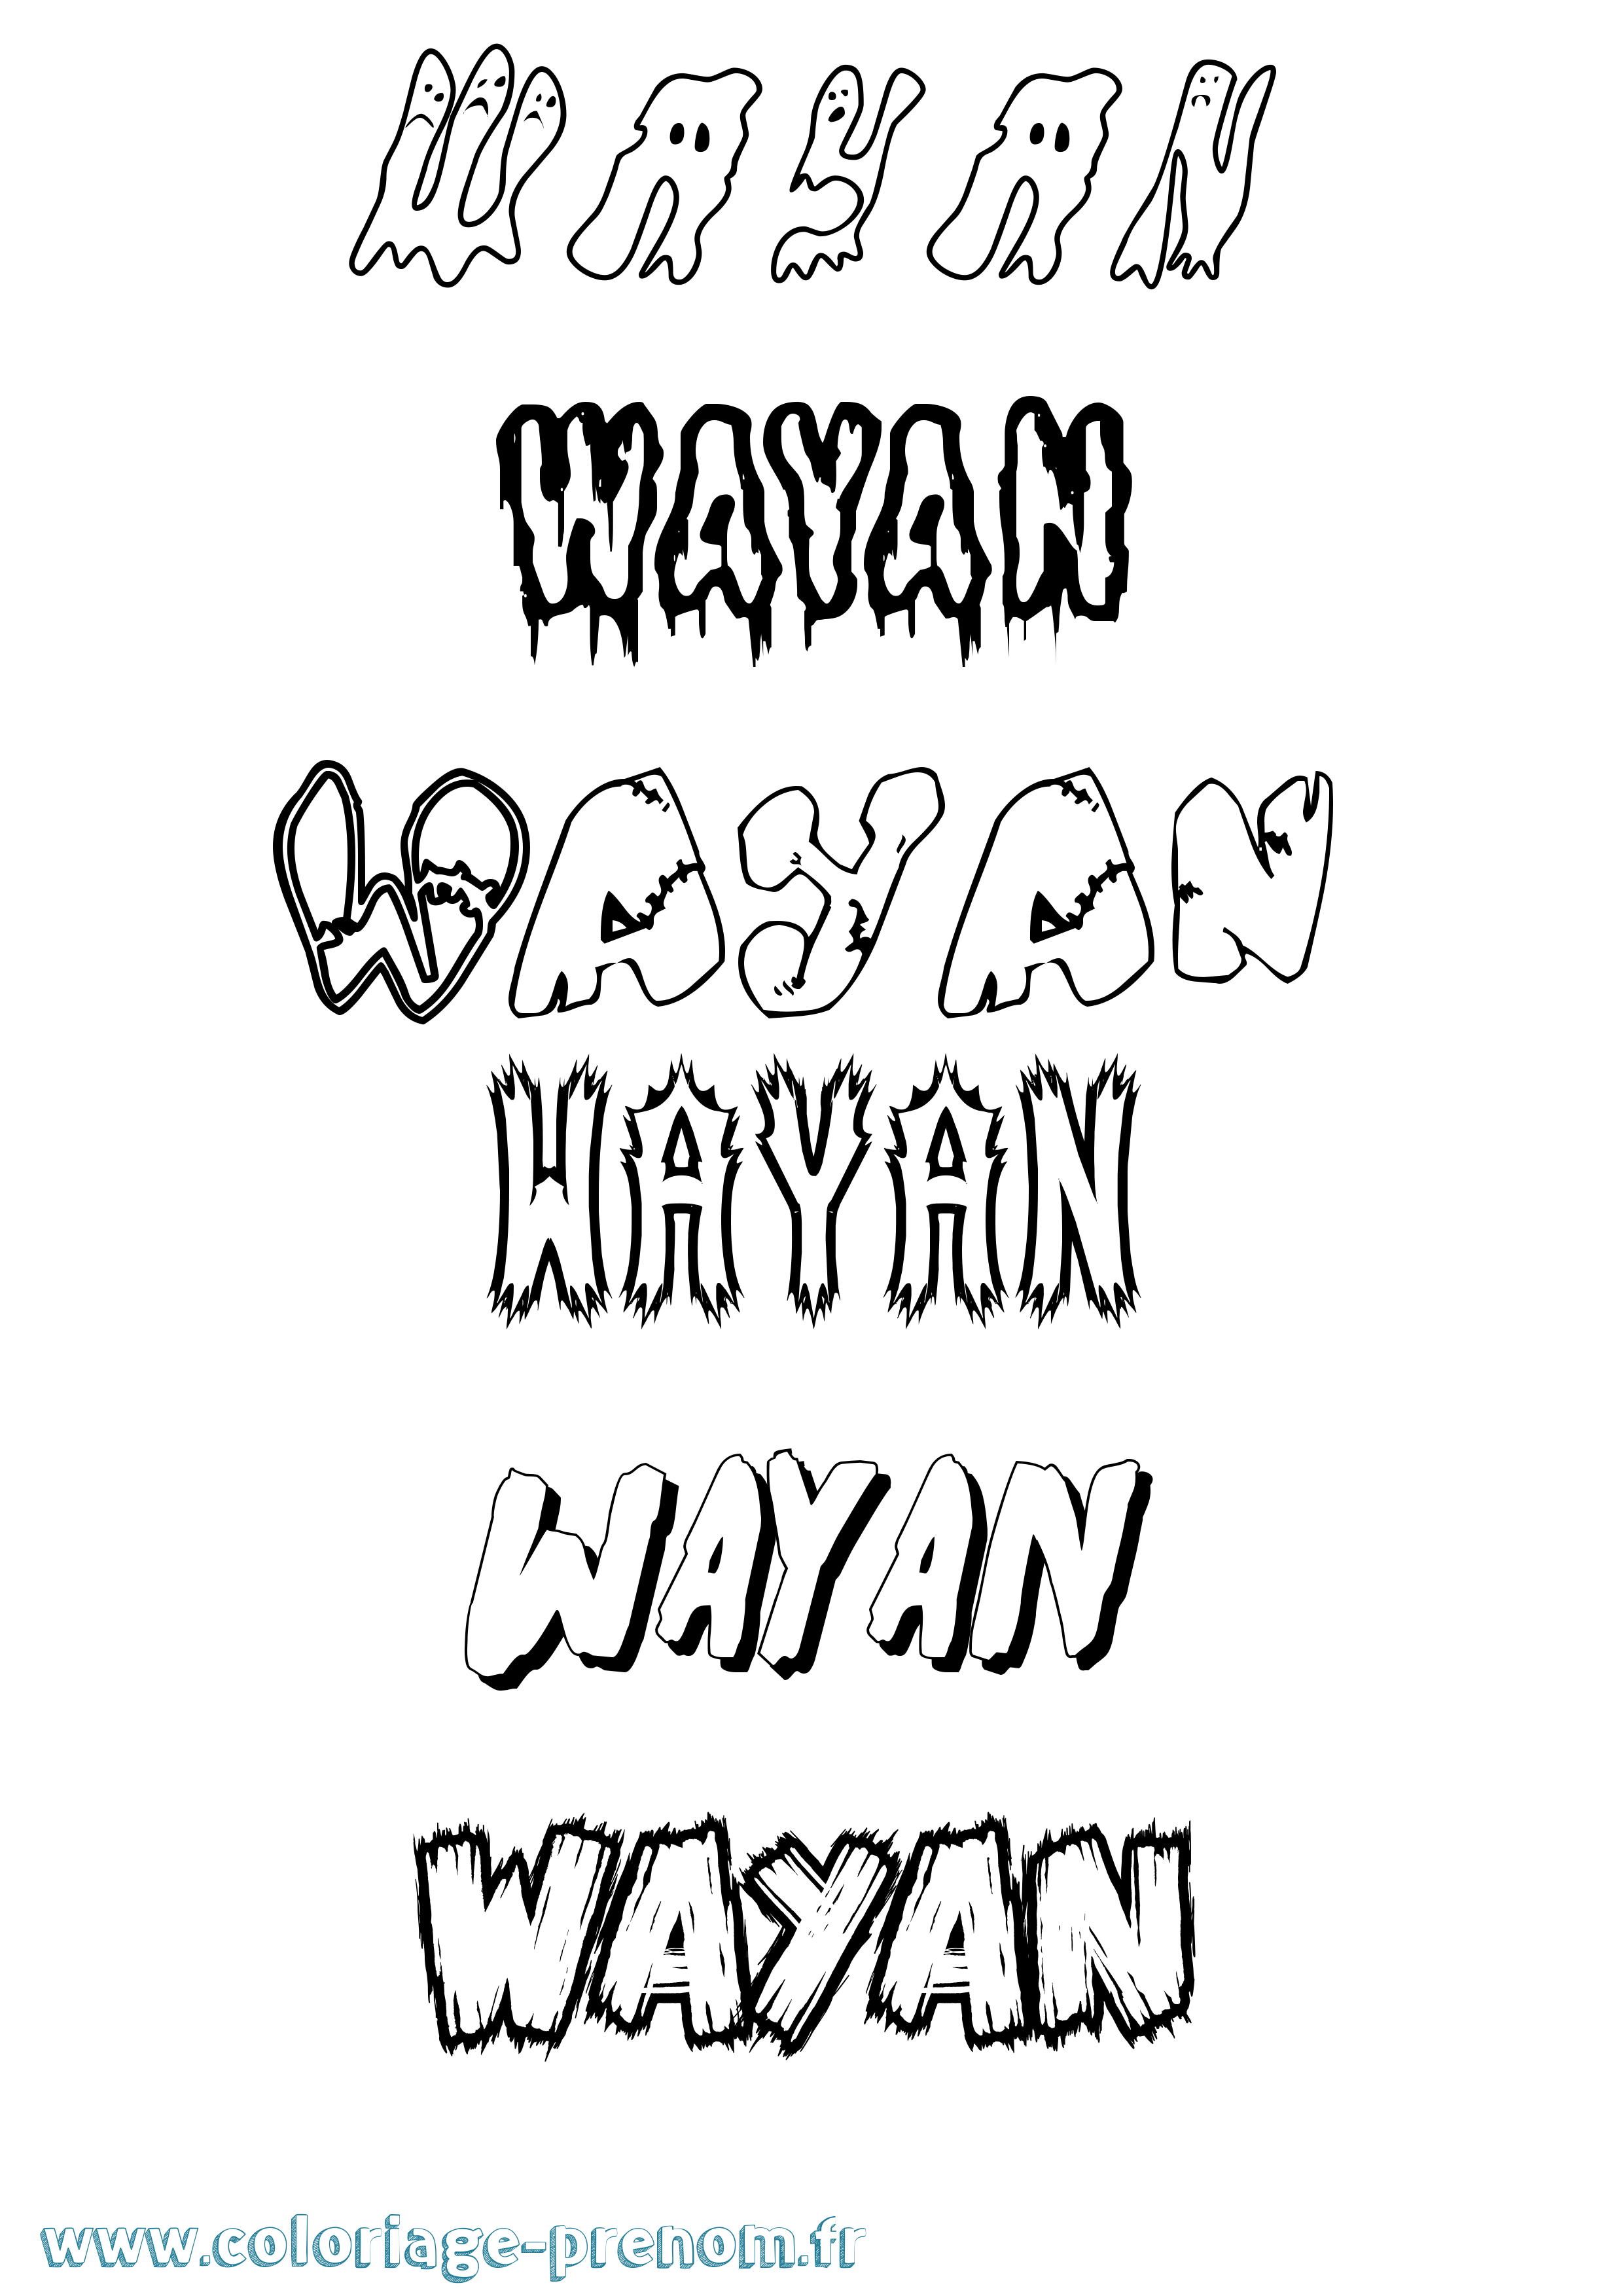 Coloriage prénom Wayan Frisson